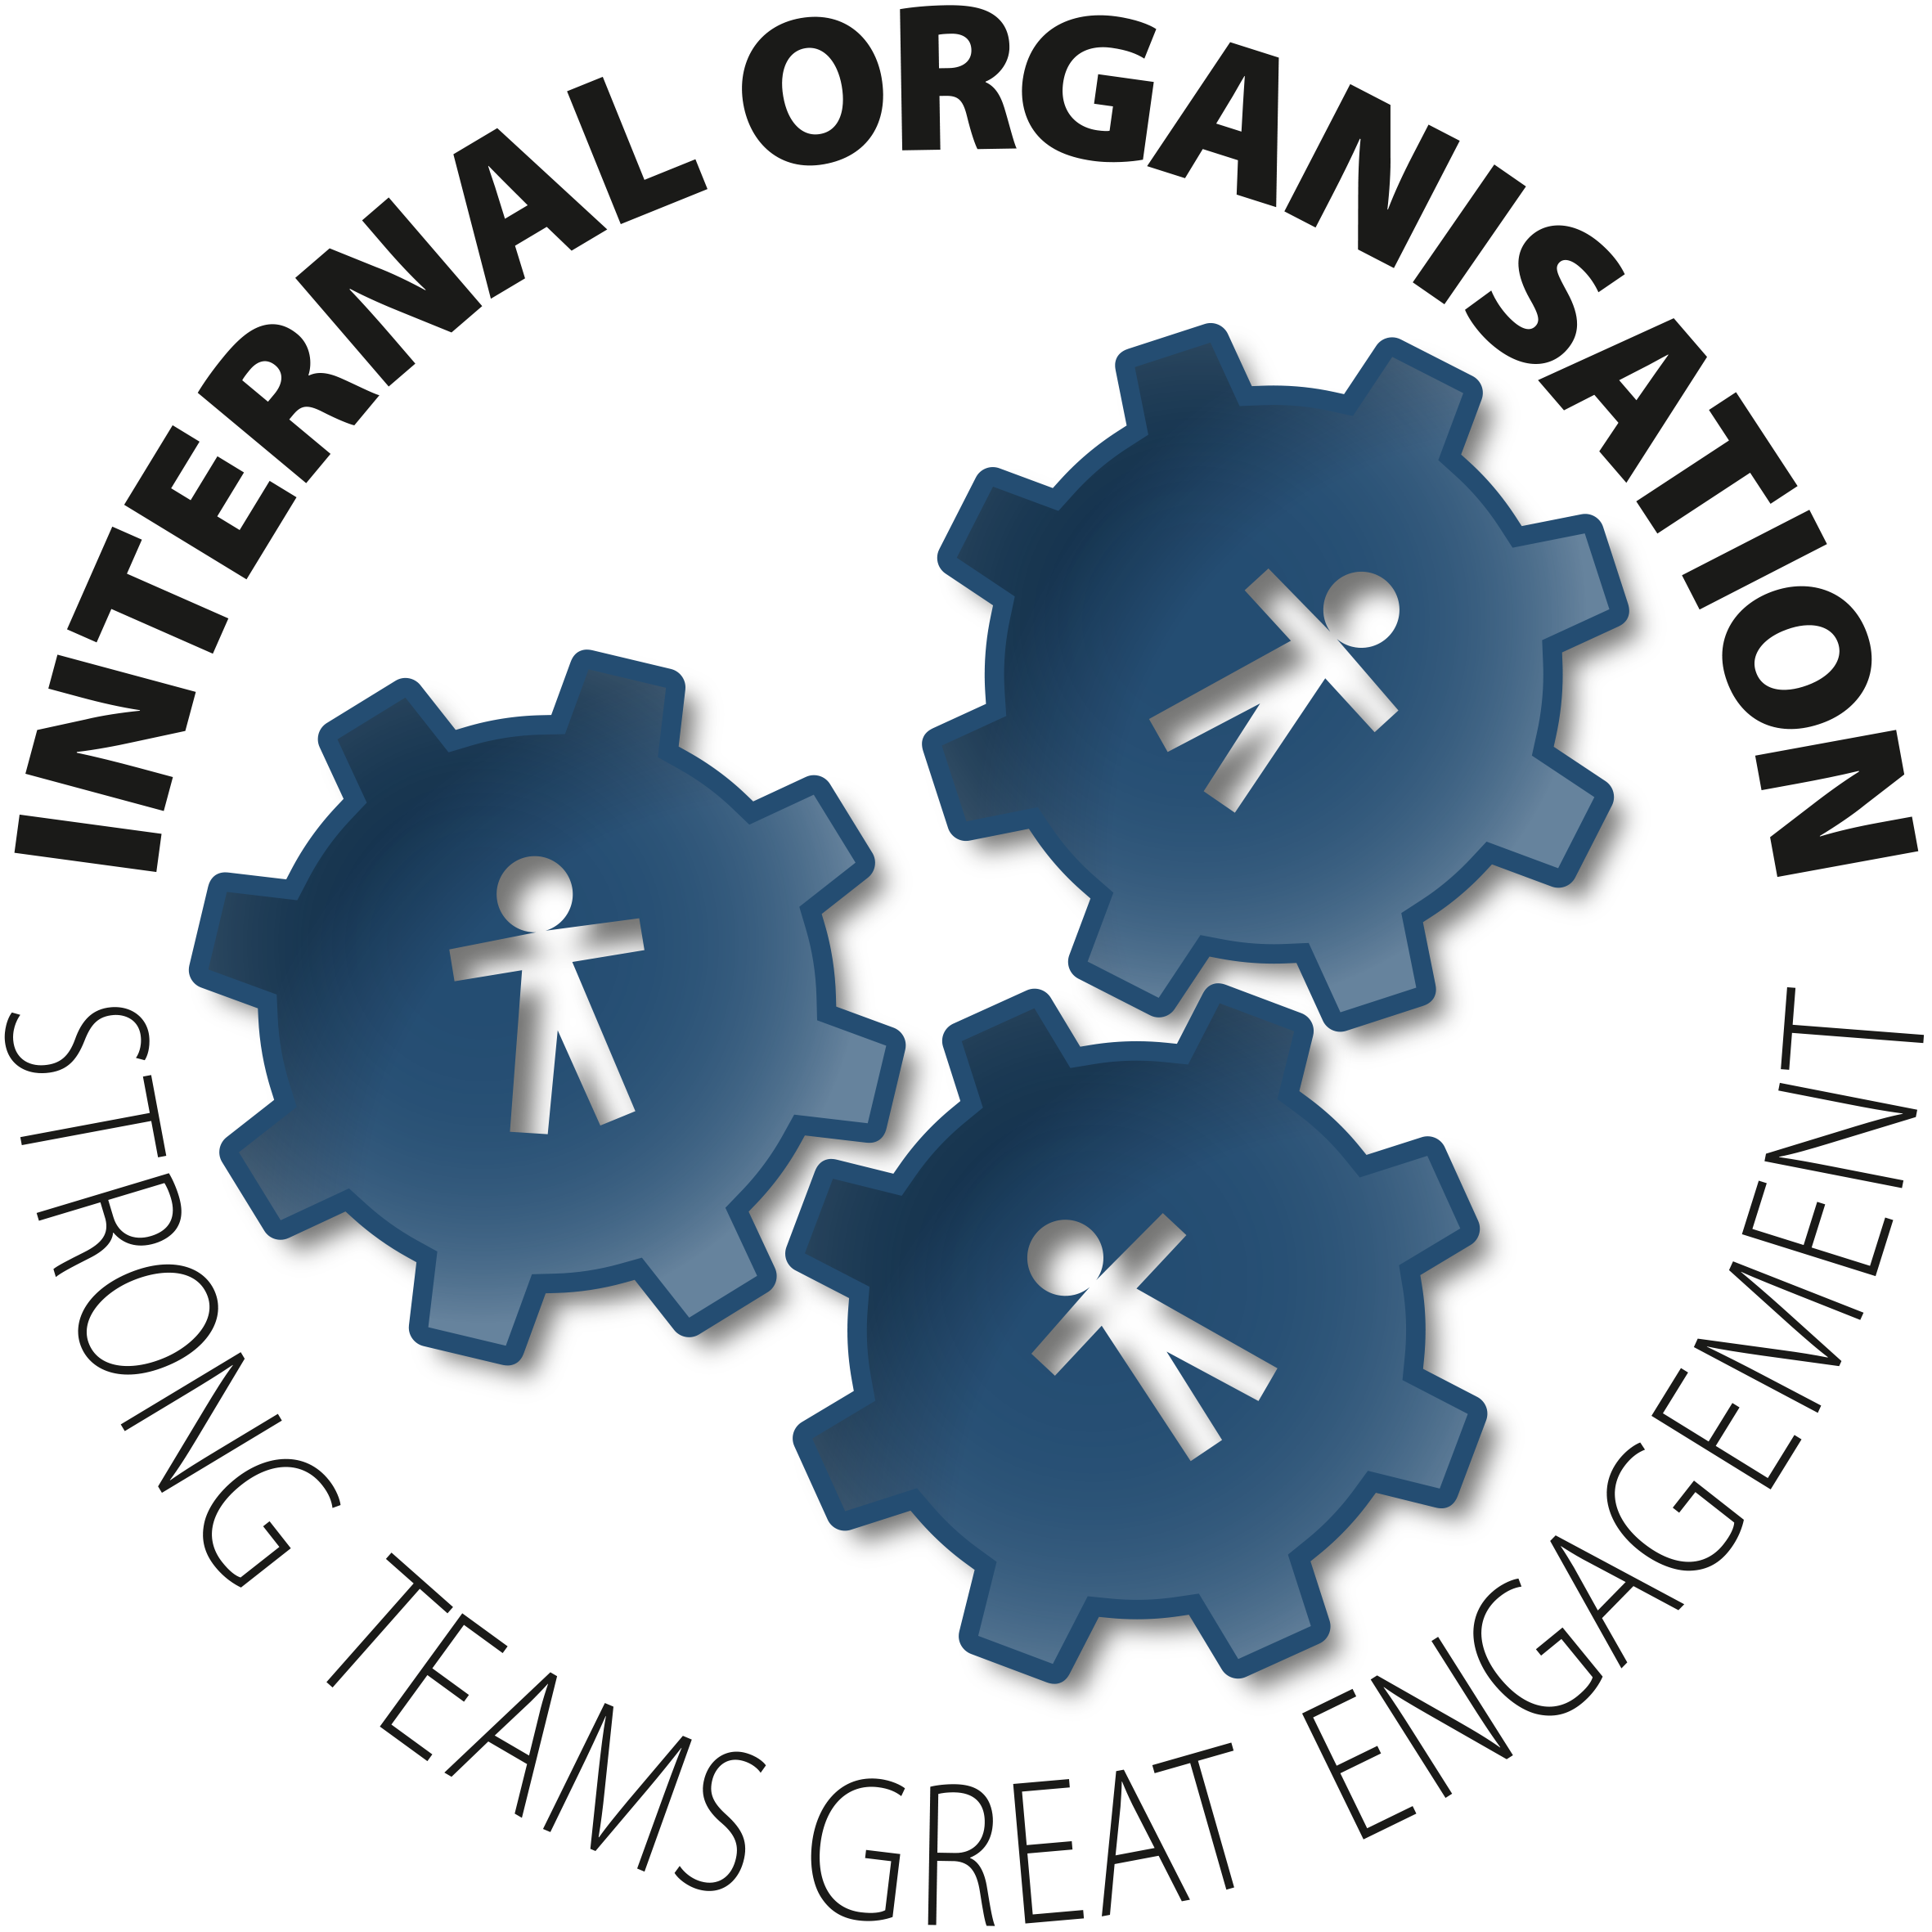 Internal Organisation 2020